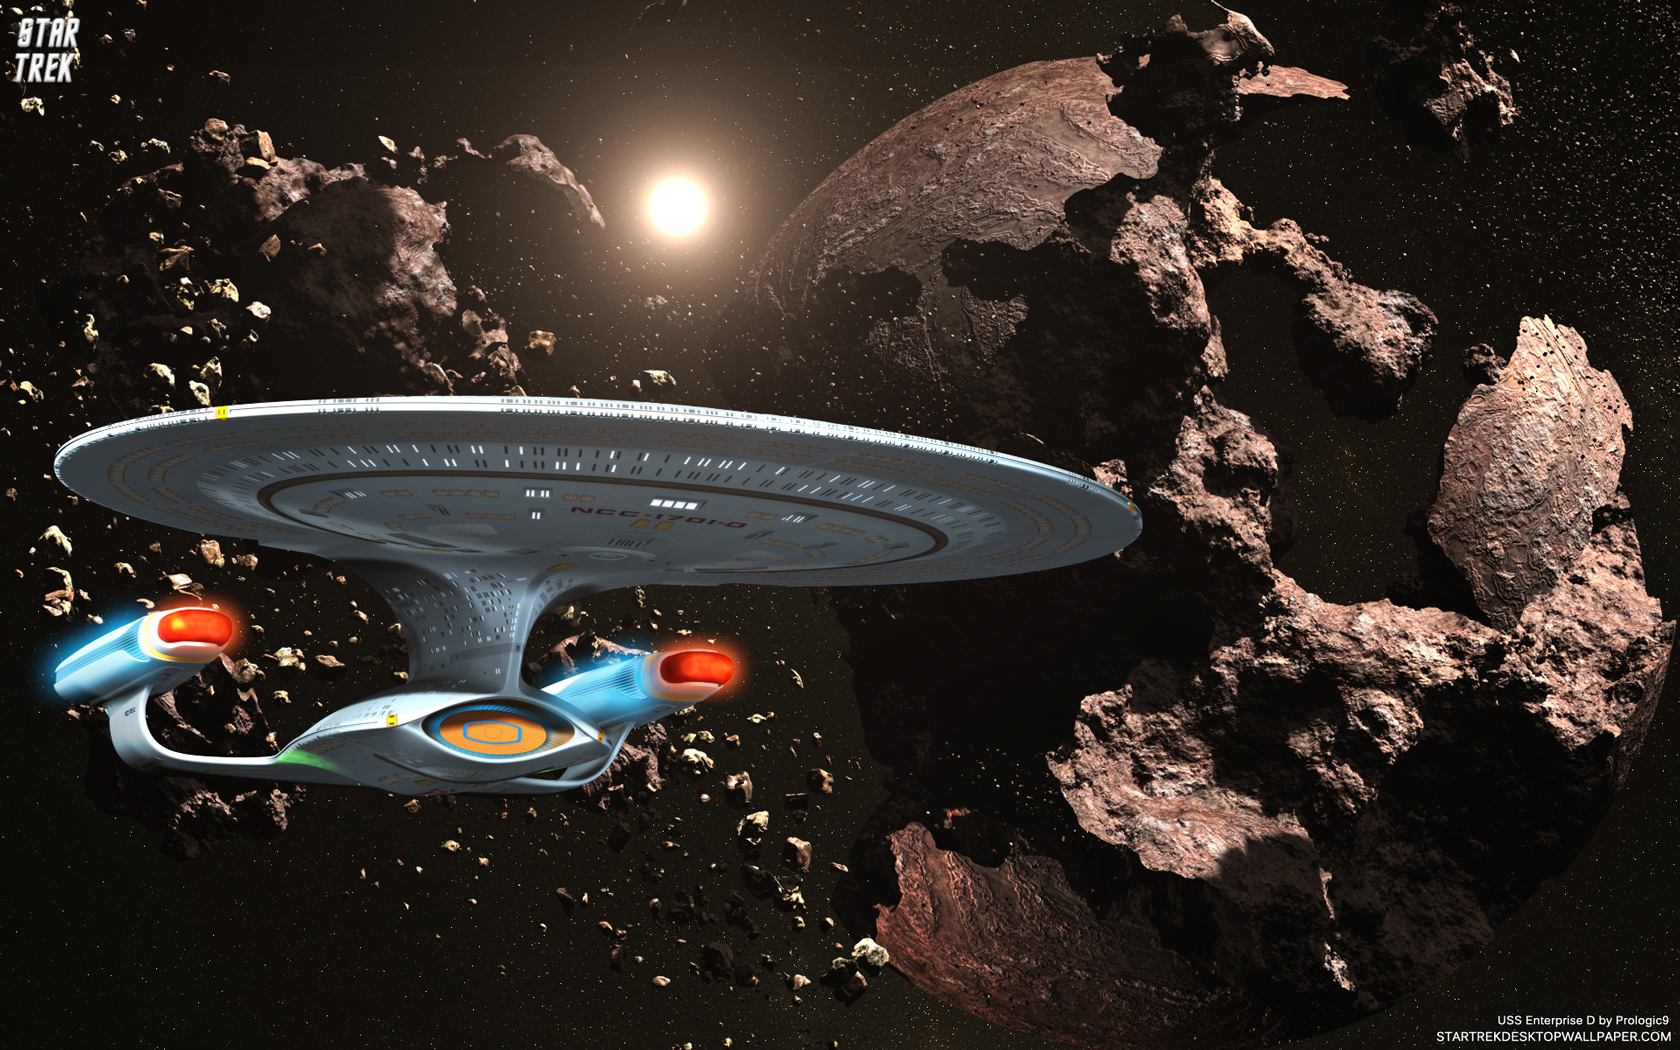 - Star Trek USS Enterprise D NCC-1701 In Asteroid Field - free Star Trek computer desktop wallpaper, pictures, images.